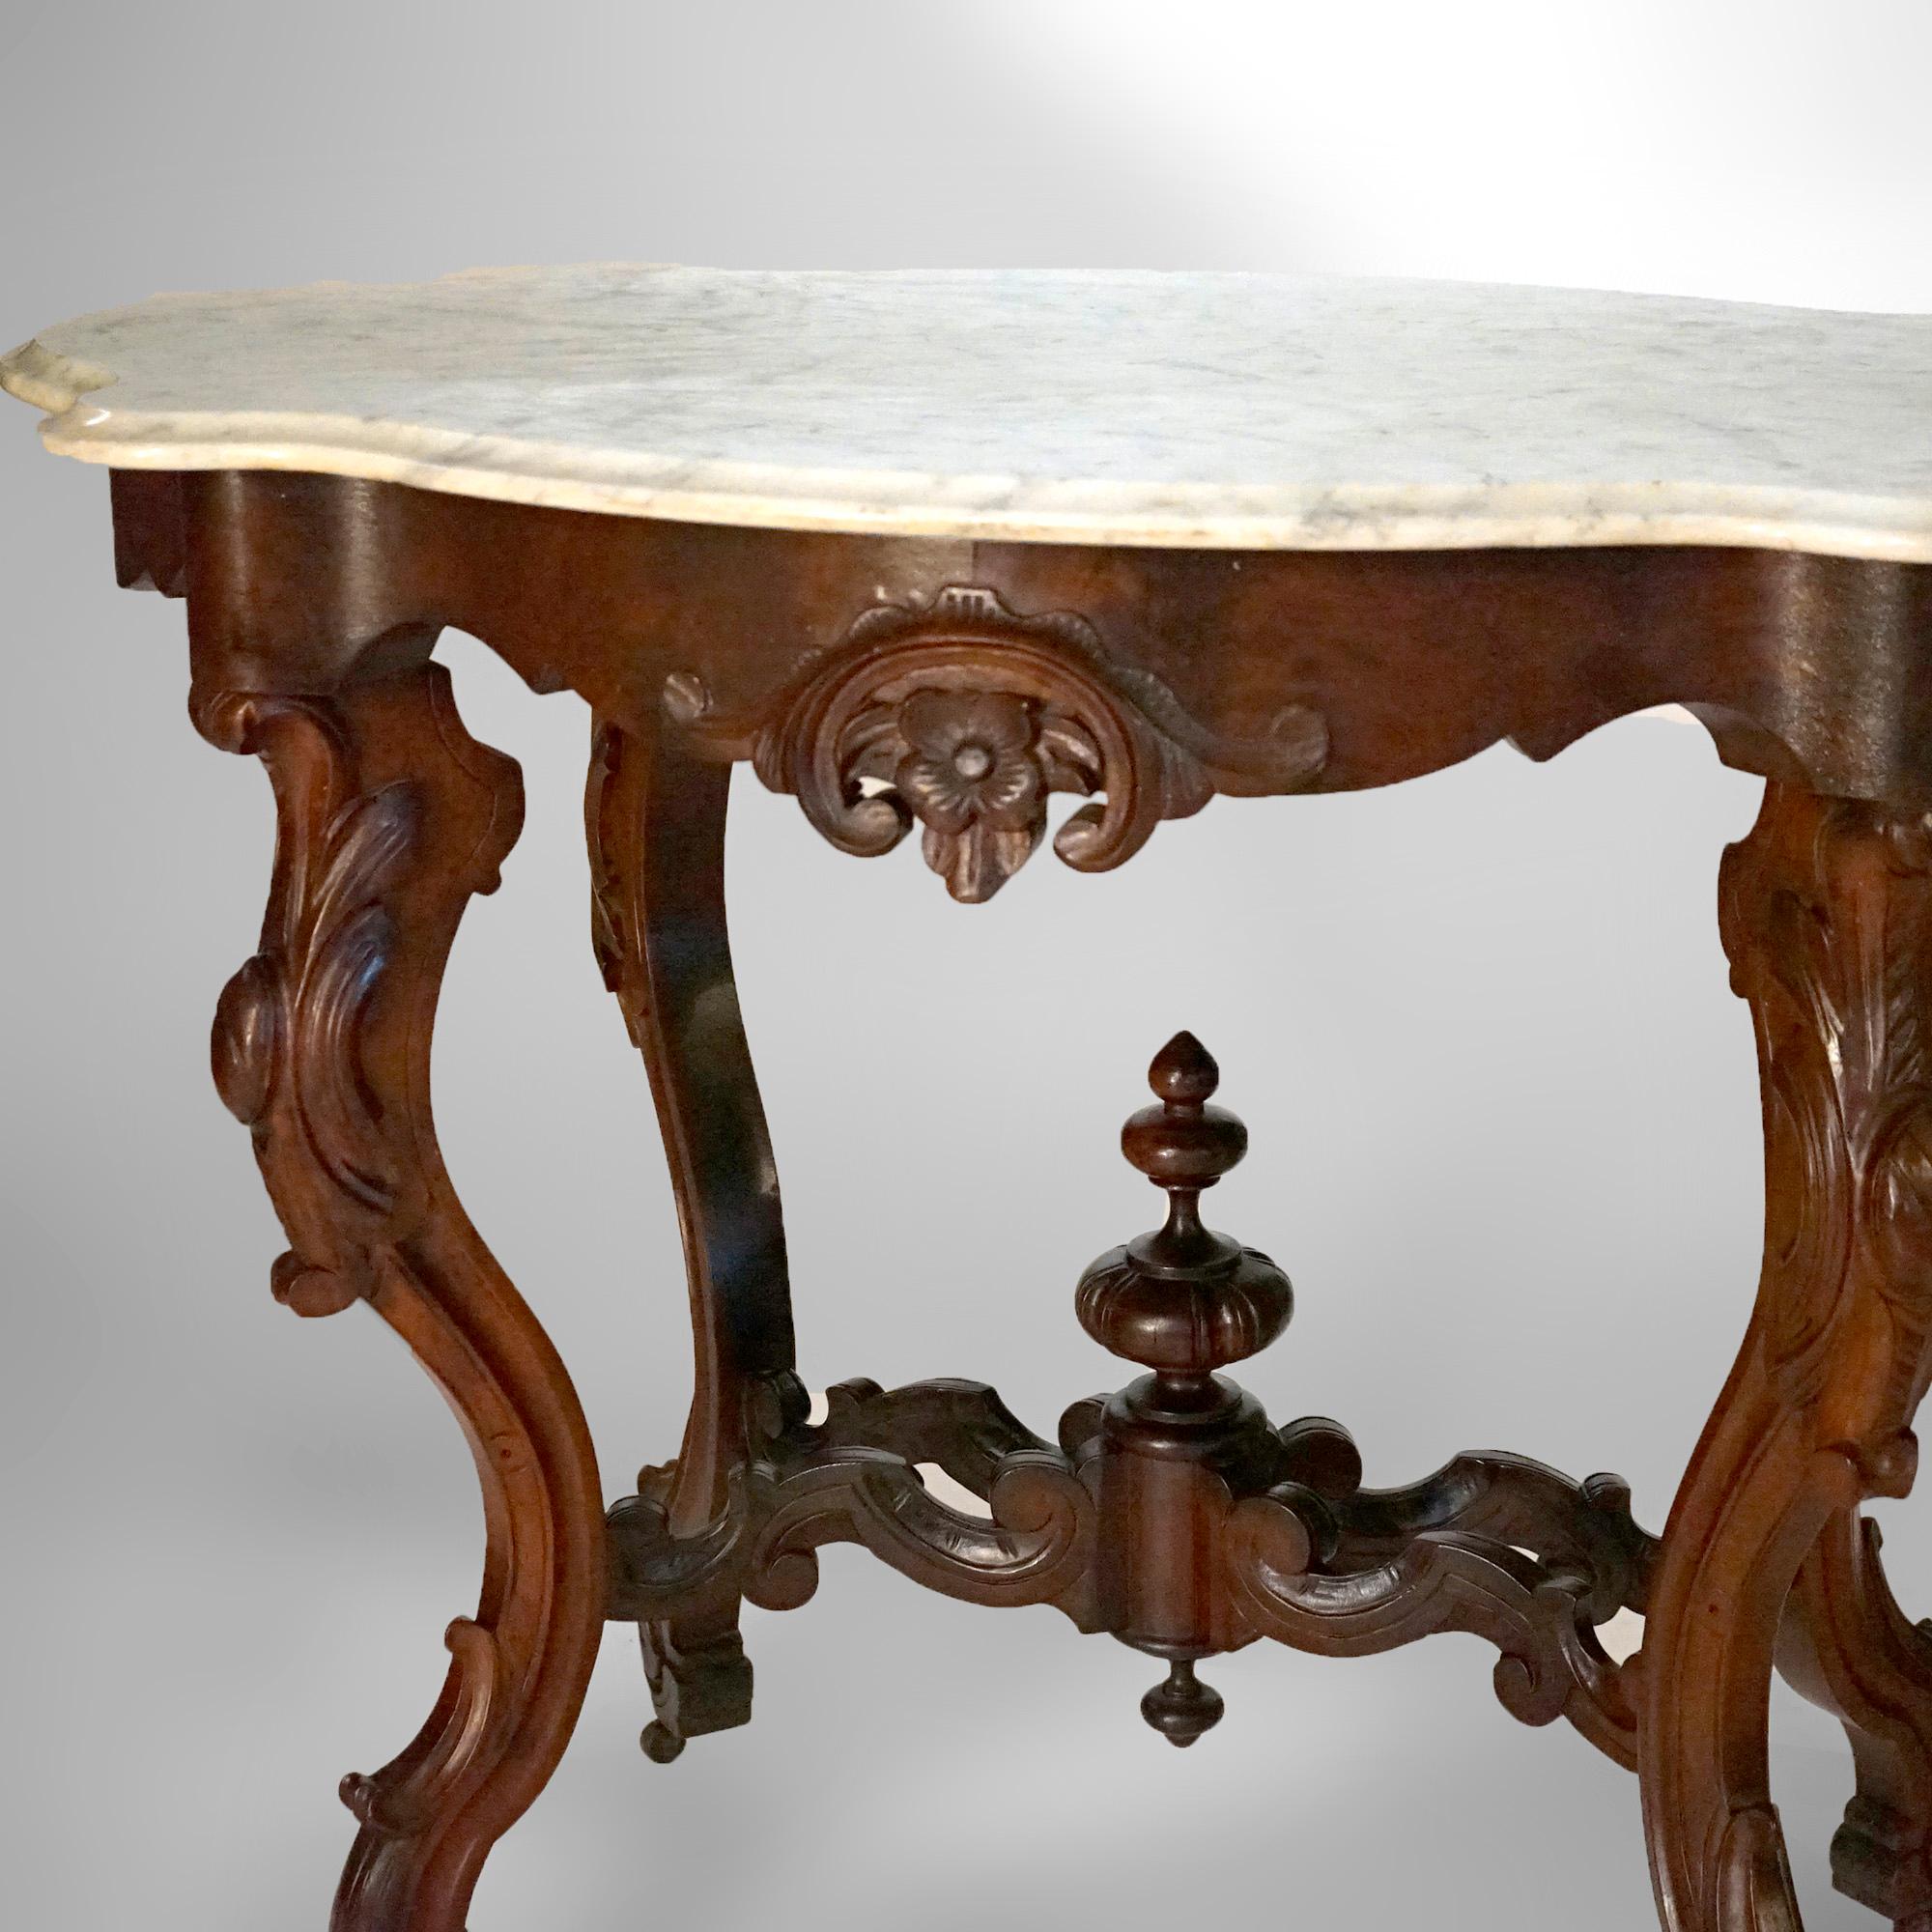 Antique Renaissance Revival Walnut, Rosewood & Marble Parlor Table c1890 For Sale 2